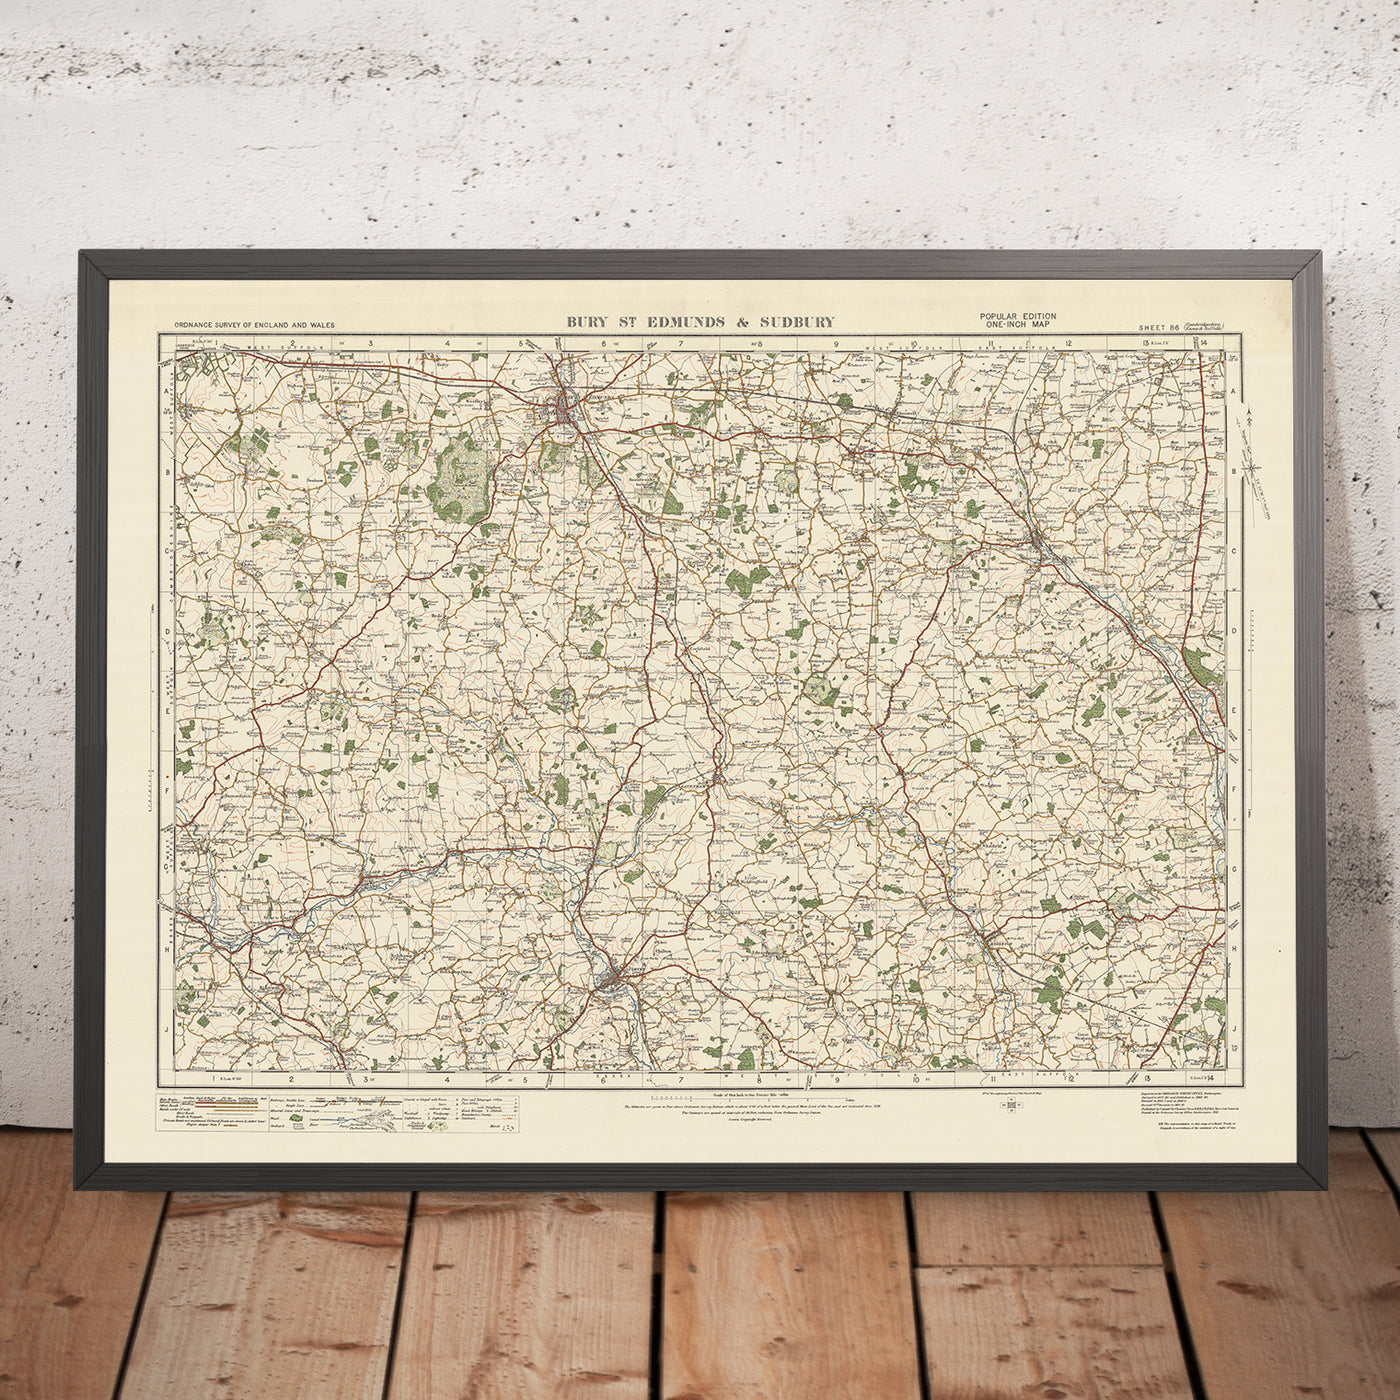 Mapa de Old Ordnance Survey, hoja 86 - Bury St. Edmunds y Sudbury, 1925: Haverhill, Stowmarket, Hadleigh, Needham Market, Glemsford